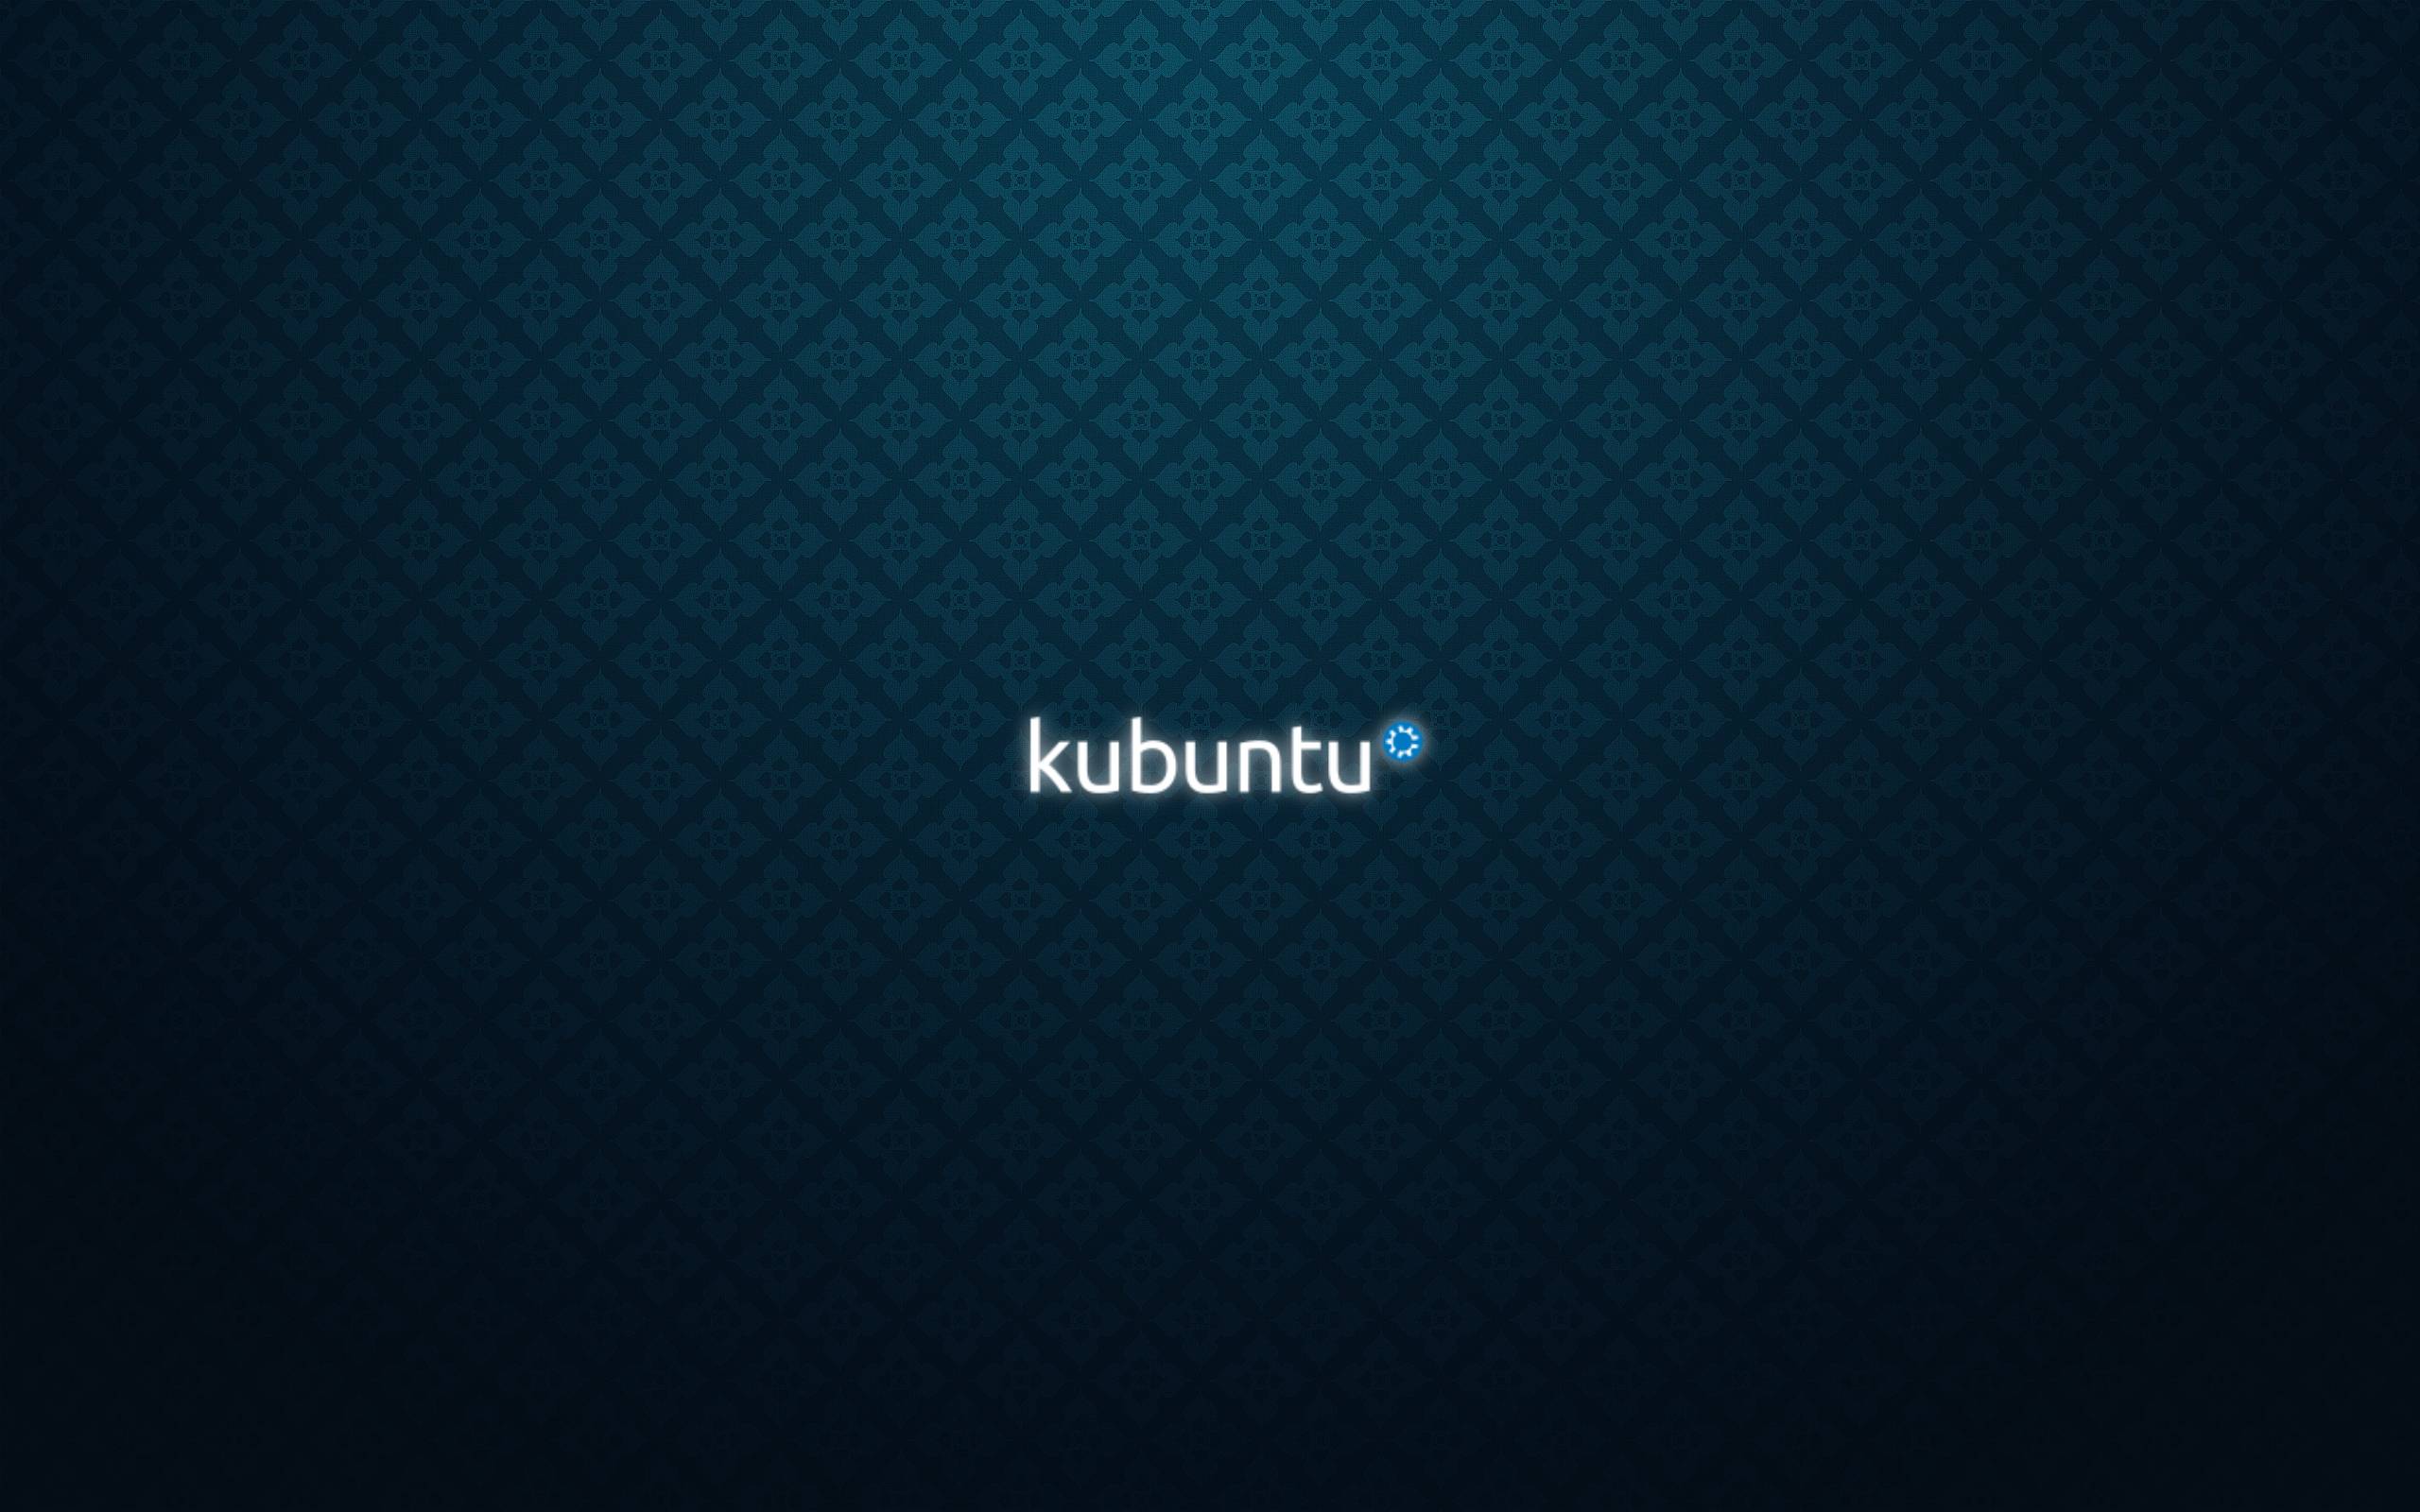 Kubuntu Wallpaper. Kubuntu Background. Kubuntu Wallpaper